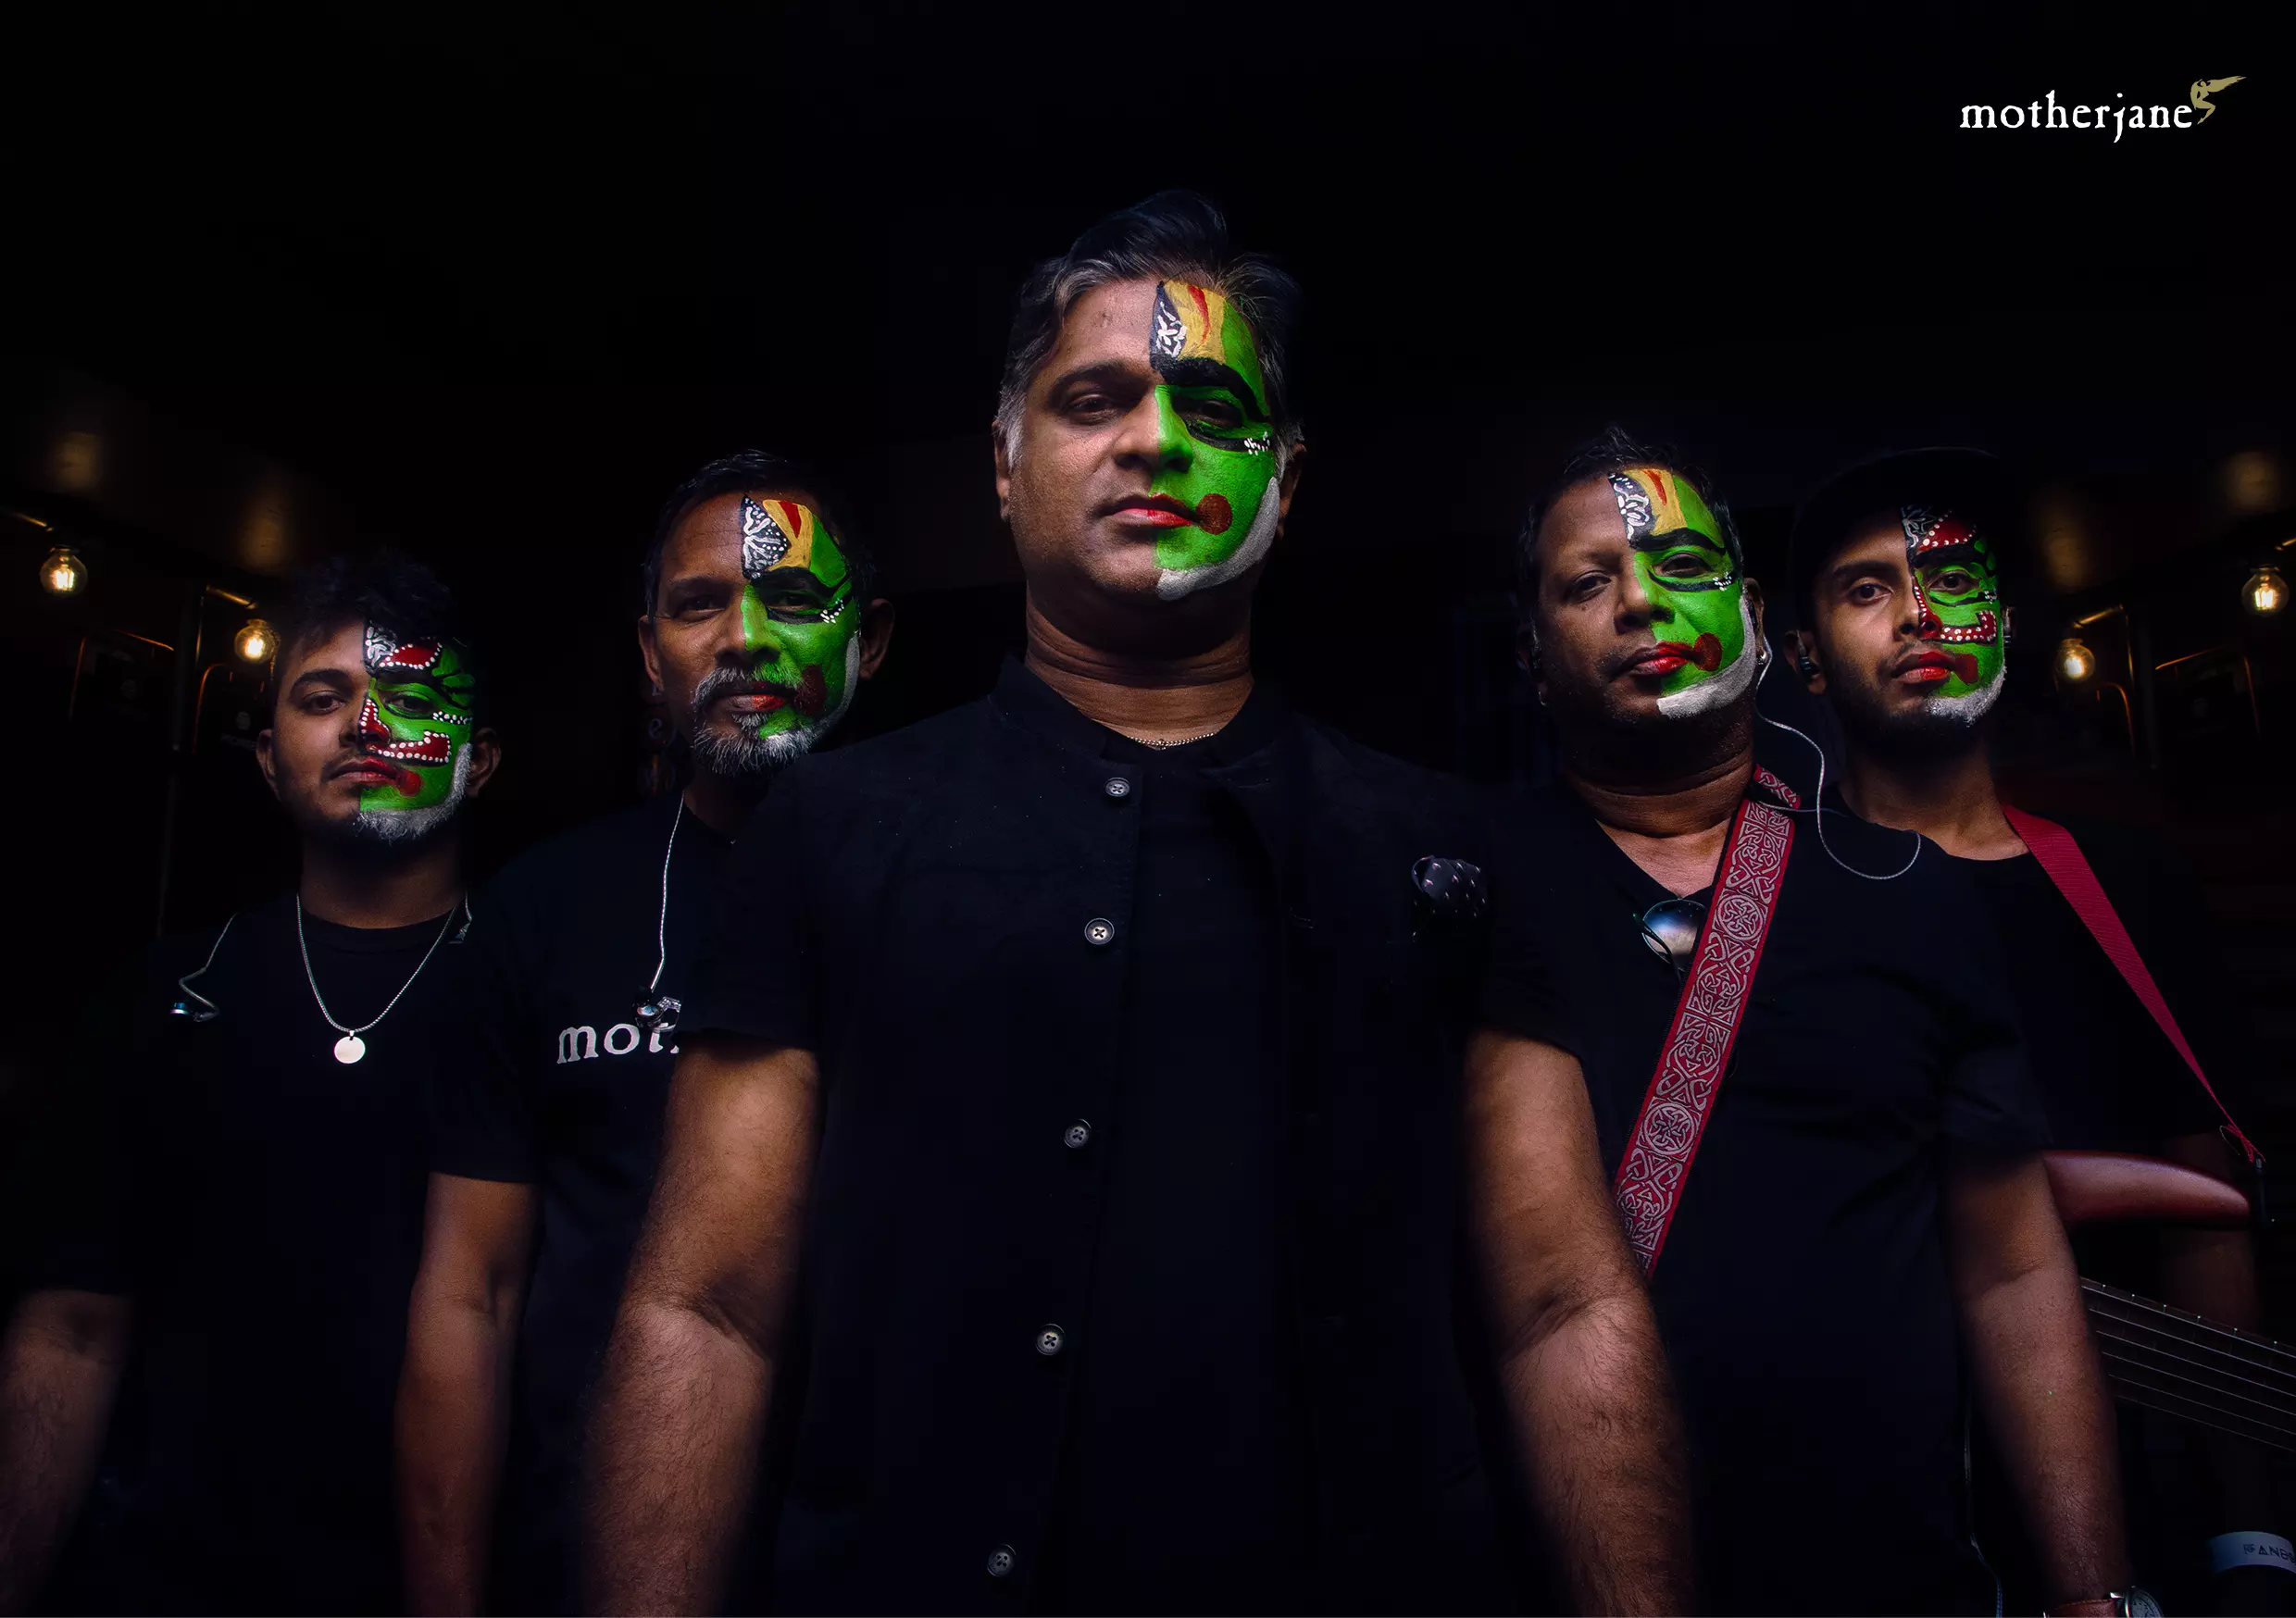 Kerala-based band Motherjane reunites after 12 years